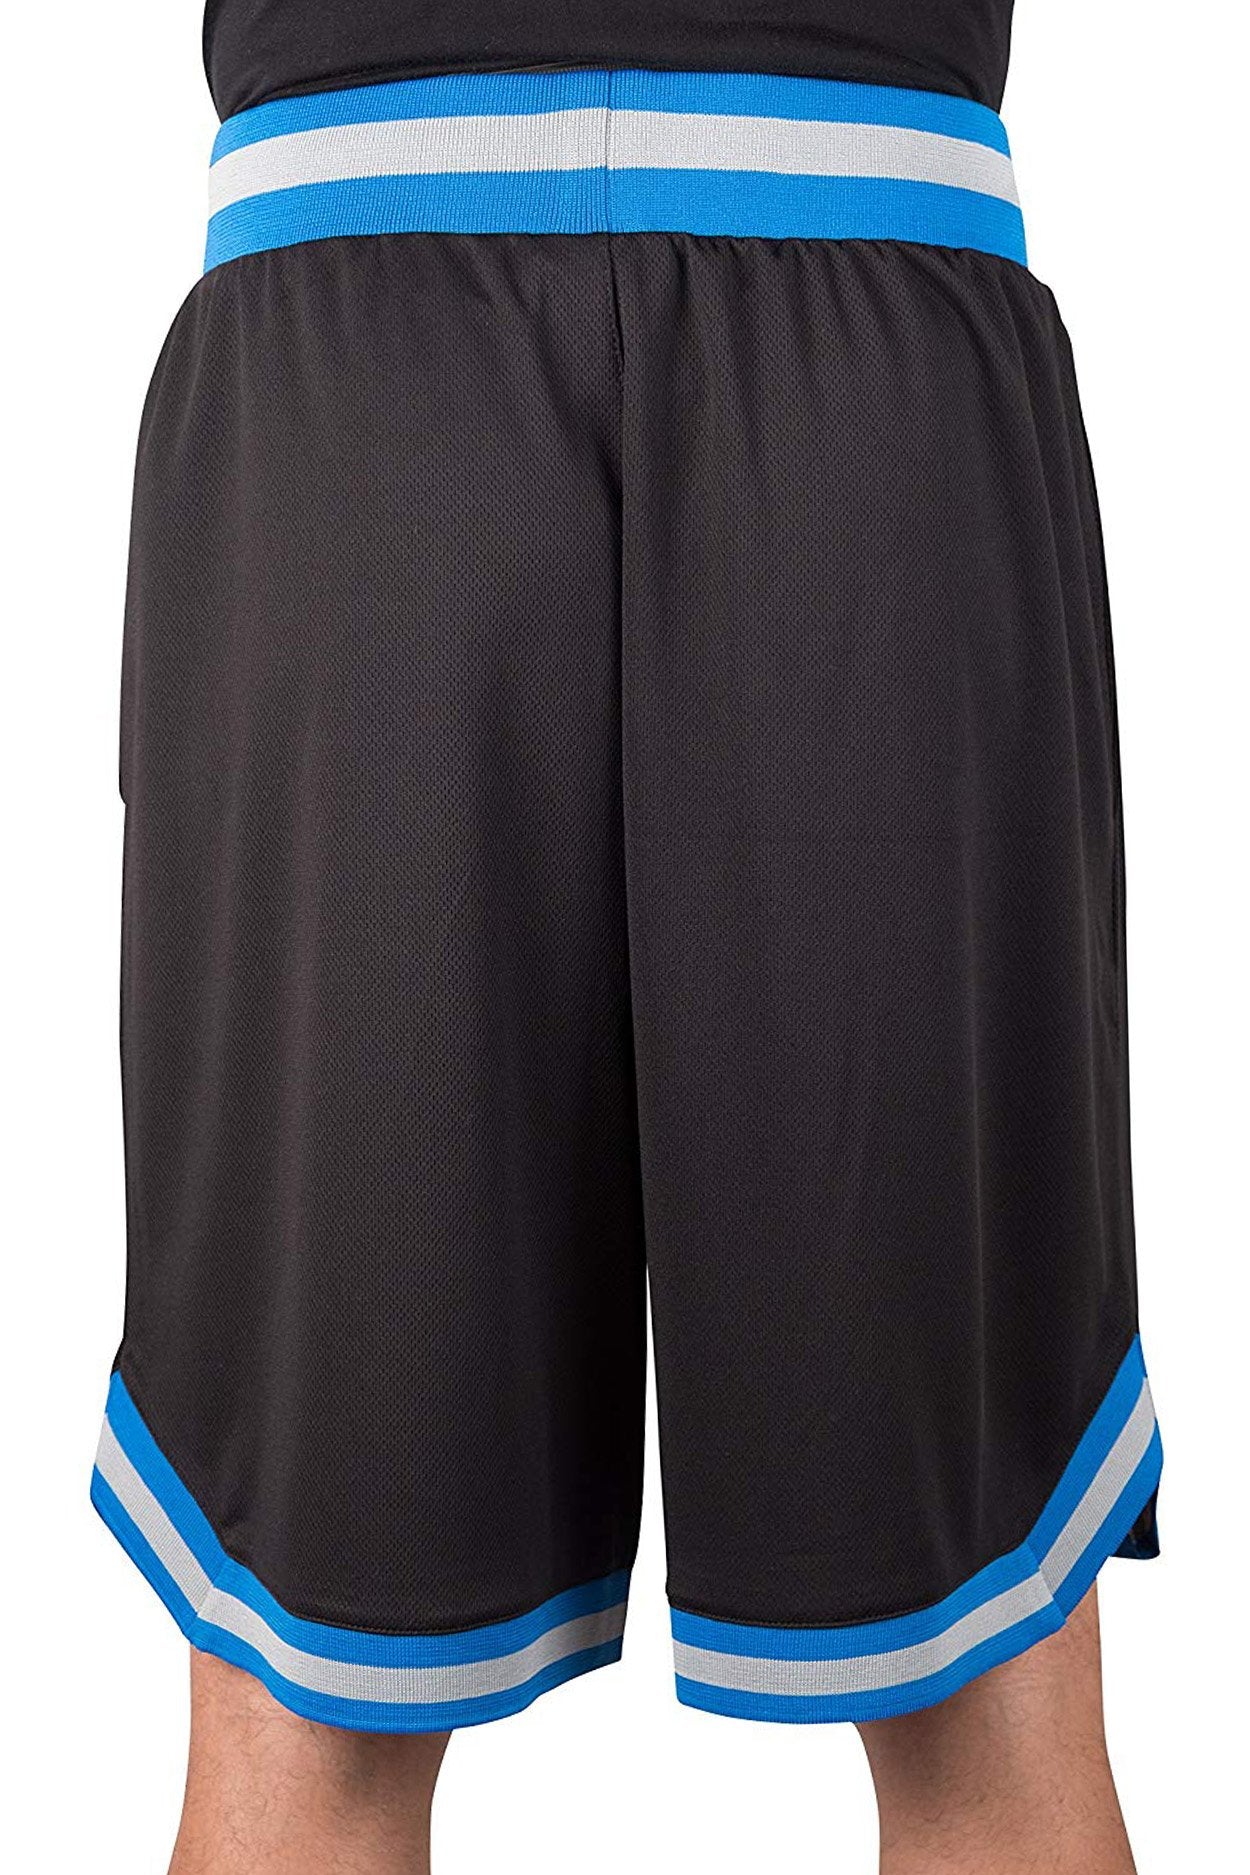 NBA Dallas Mavericks Men's Basketball Shorts|Dallas Mavericks